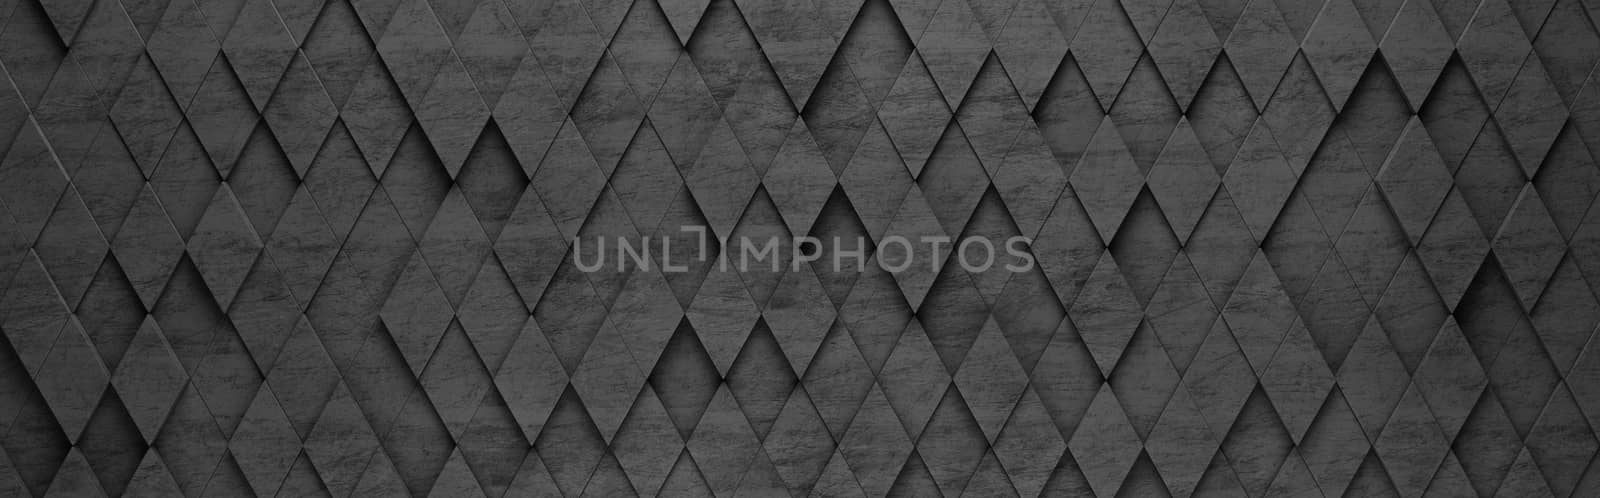 Wall of Black Rhombus Tiles Arranged in Random Height 3D Pattern Background Illustration